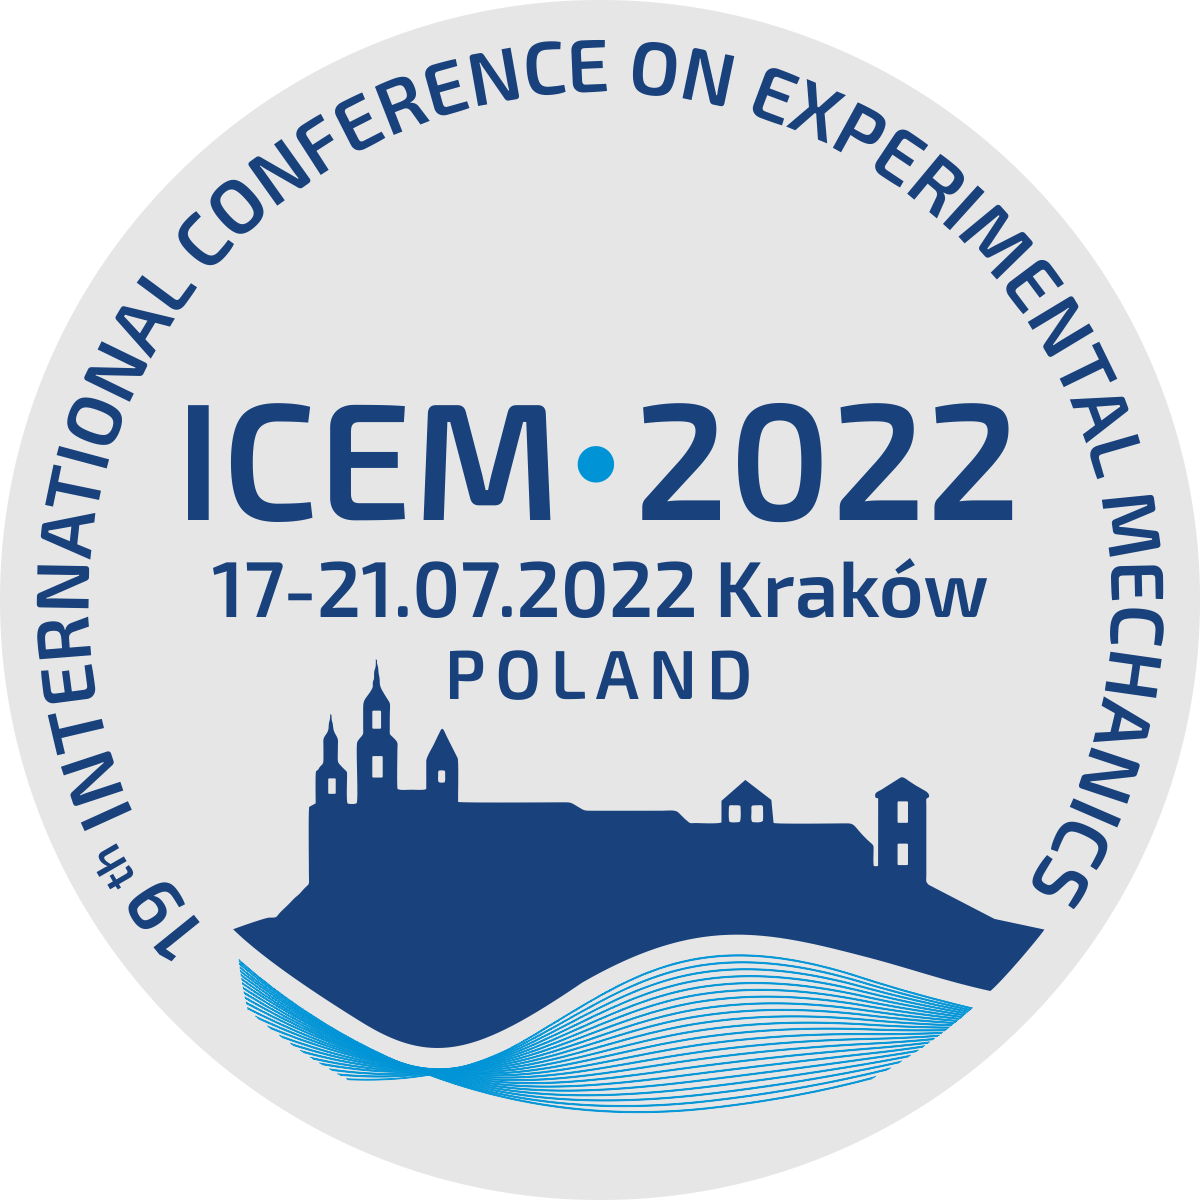 19th International Conference on Experimental Mechanics